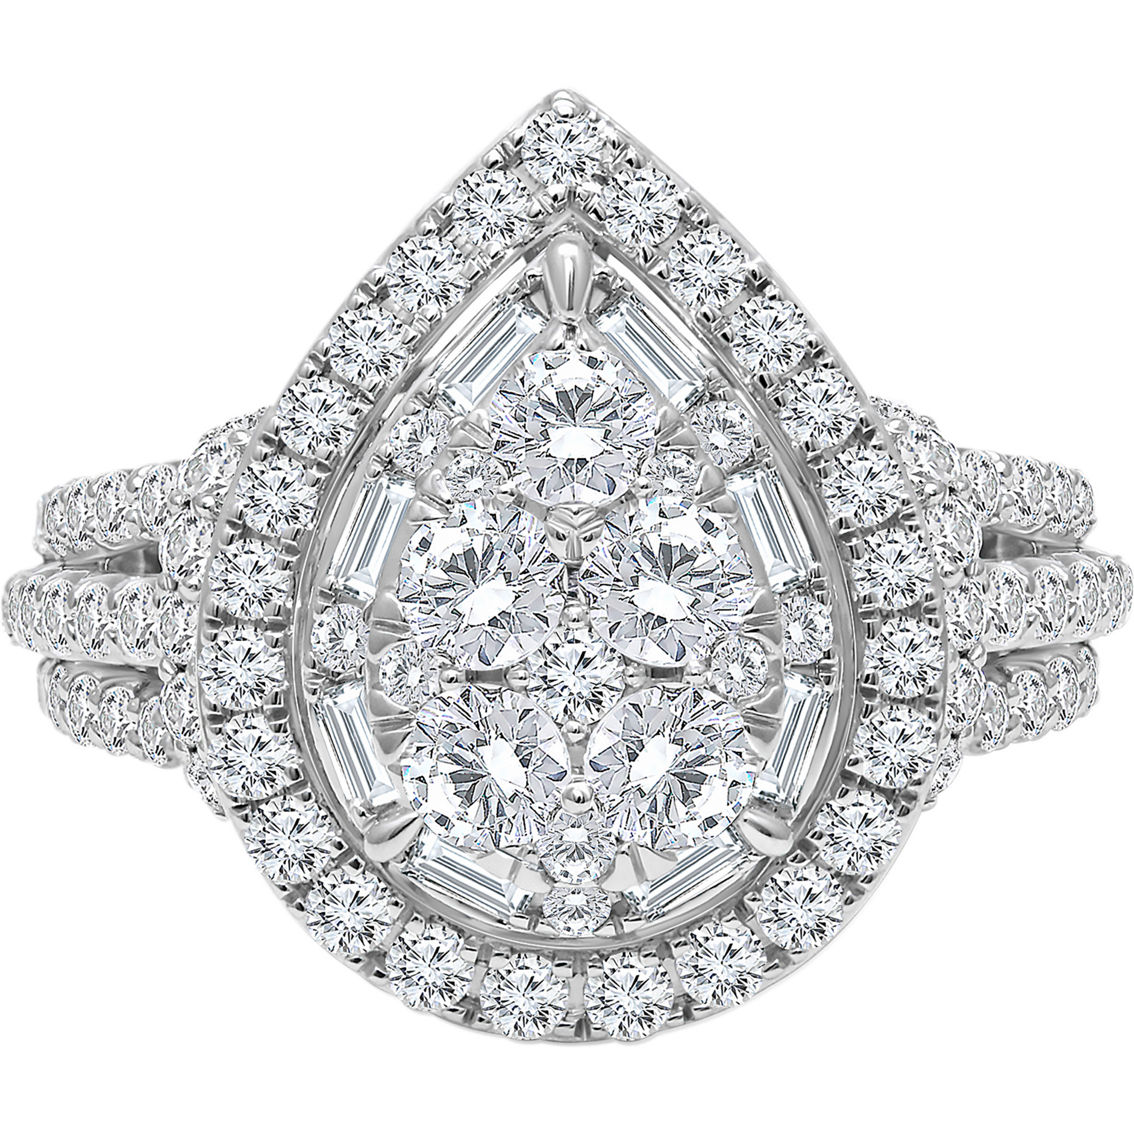 American Rose 10K White Gold 2 CTW Diamond Ring Size 7 - Image 2 of 4